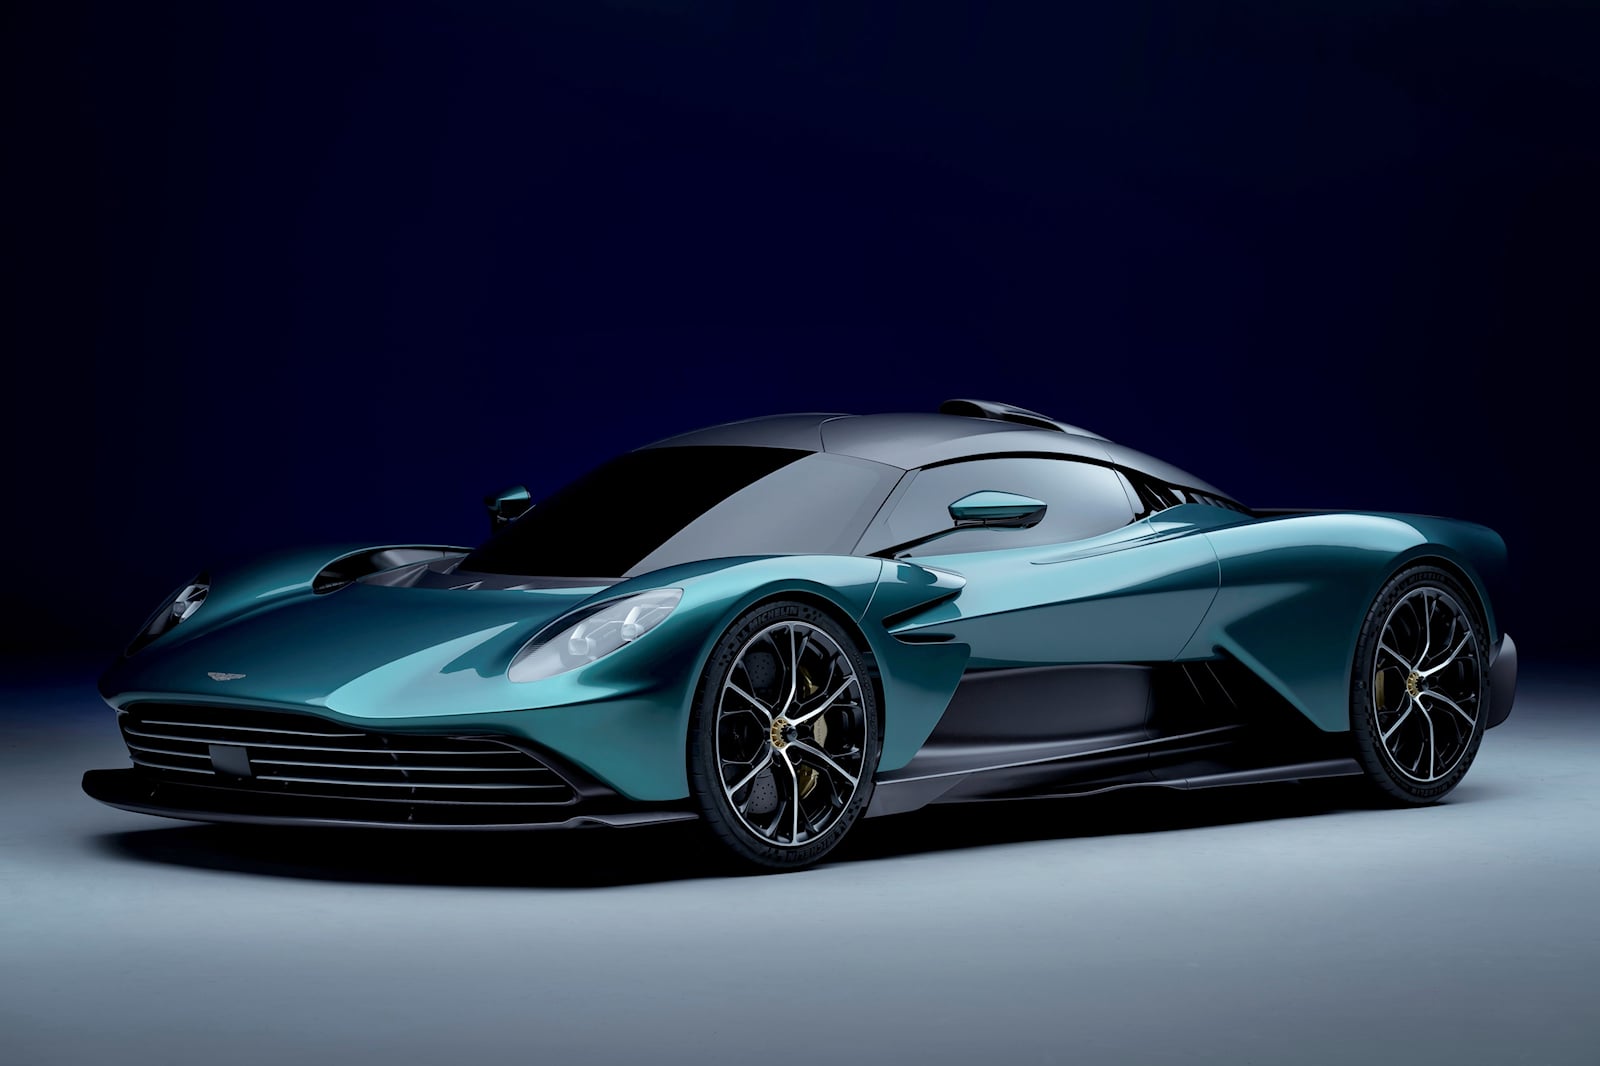 У Aston Martin Valhalla будет больше мощности